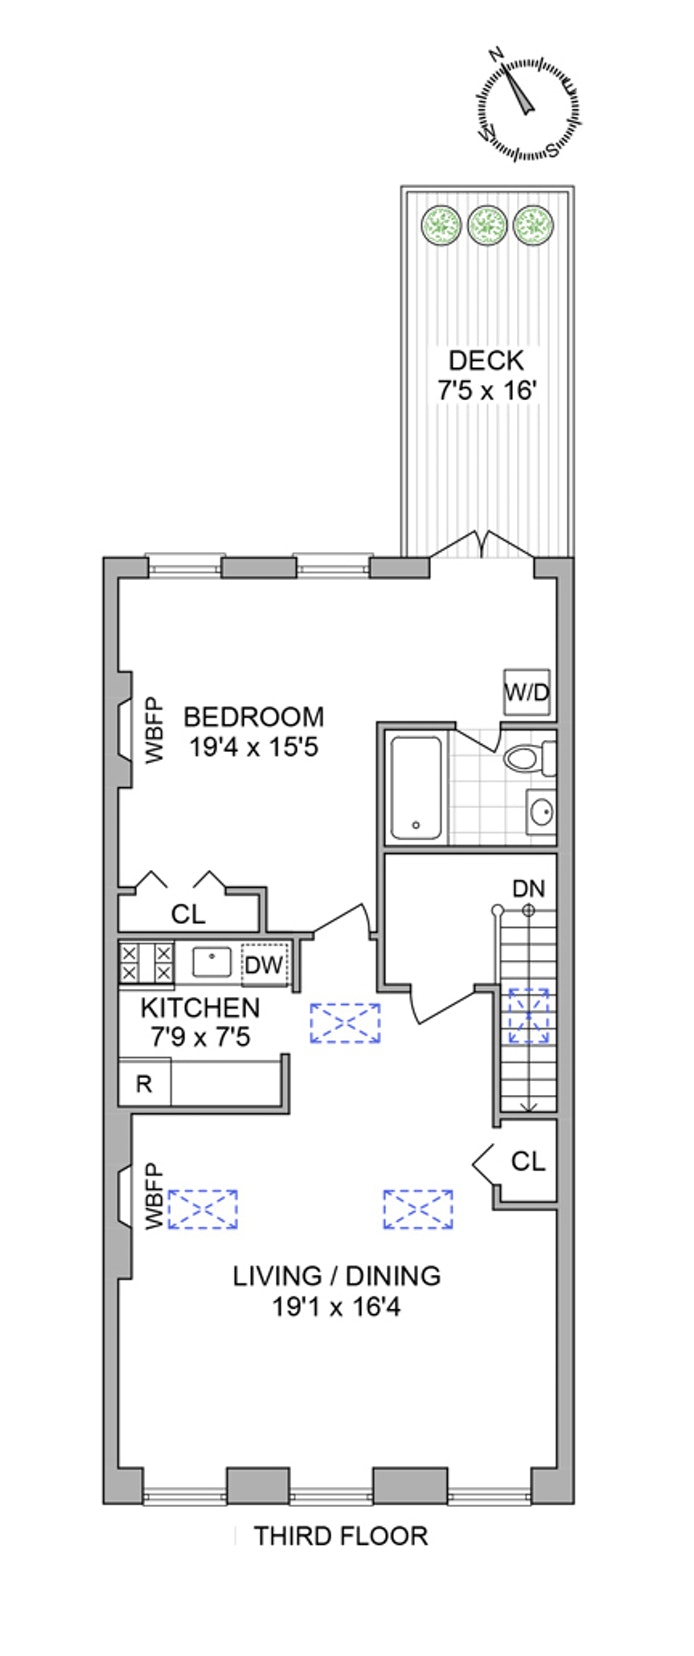 Floorplan for 459 West 24th Street